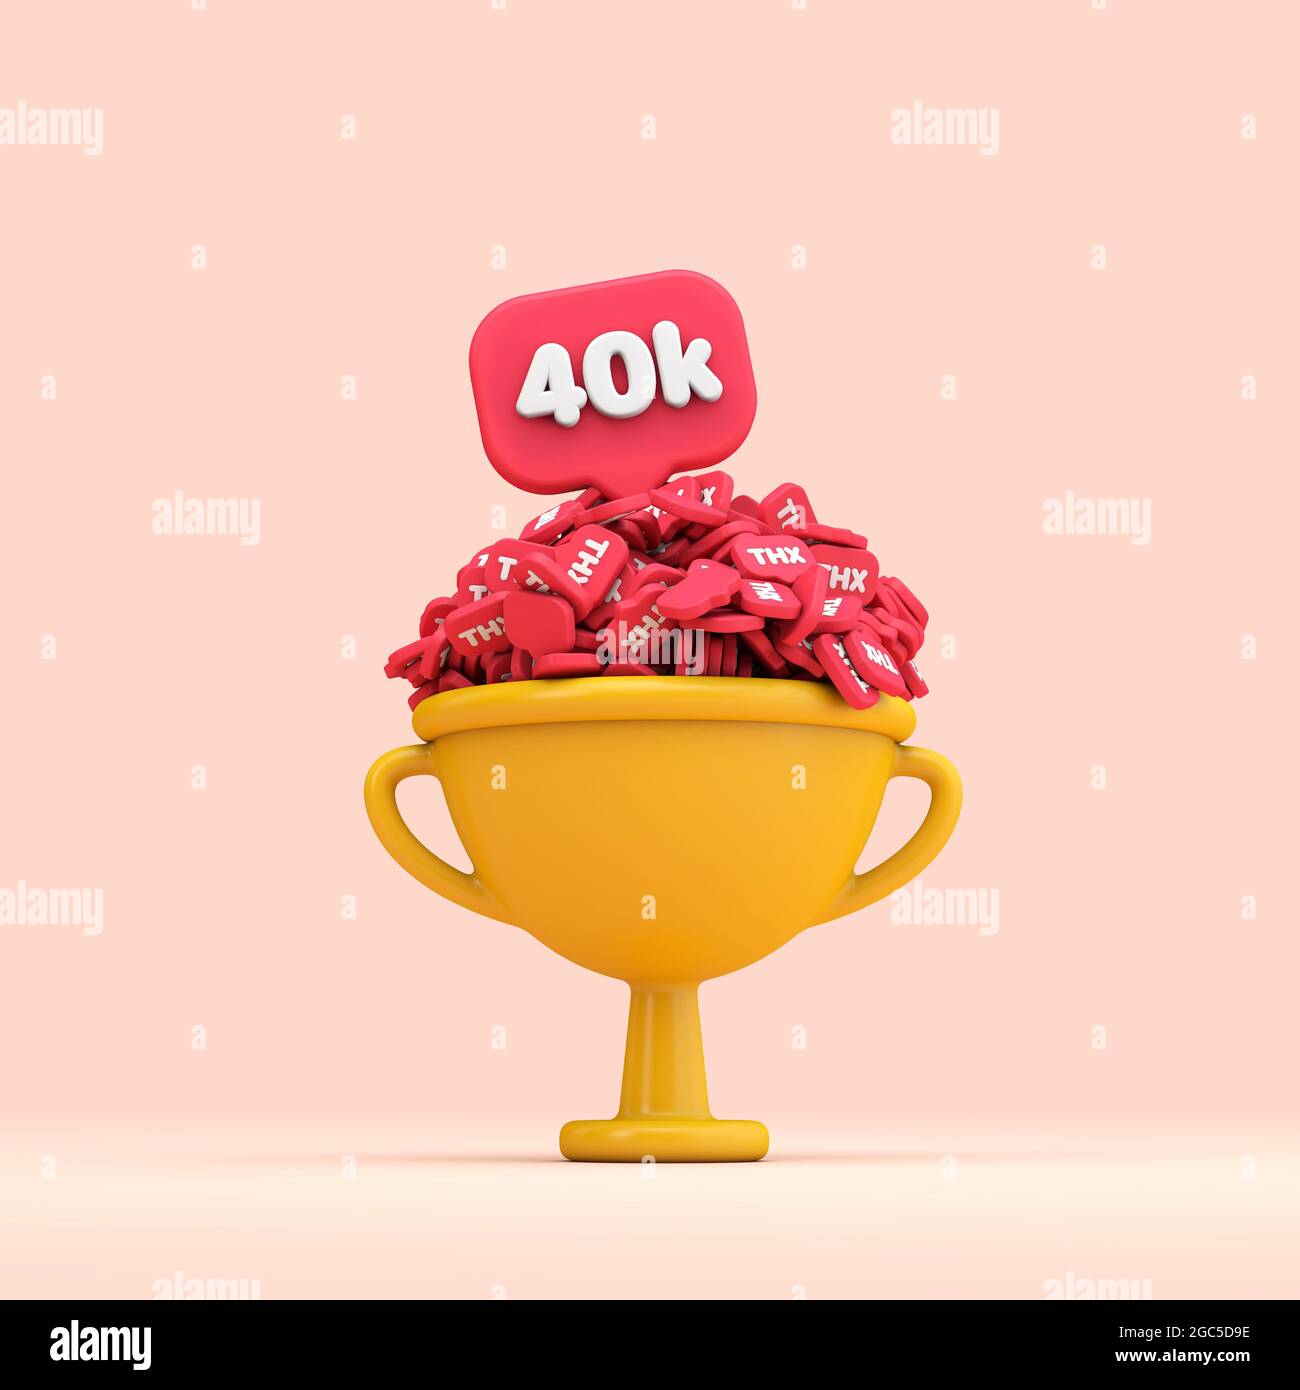 Grazie 40k social media followers celebrazione trofeo. Rendering 3D Foto Stock